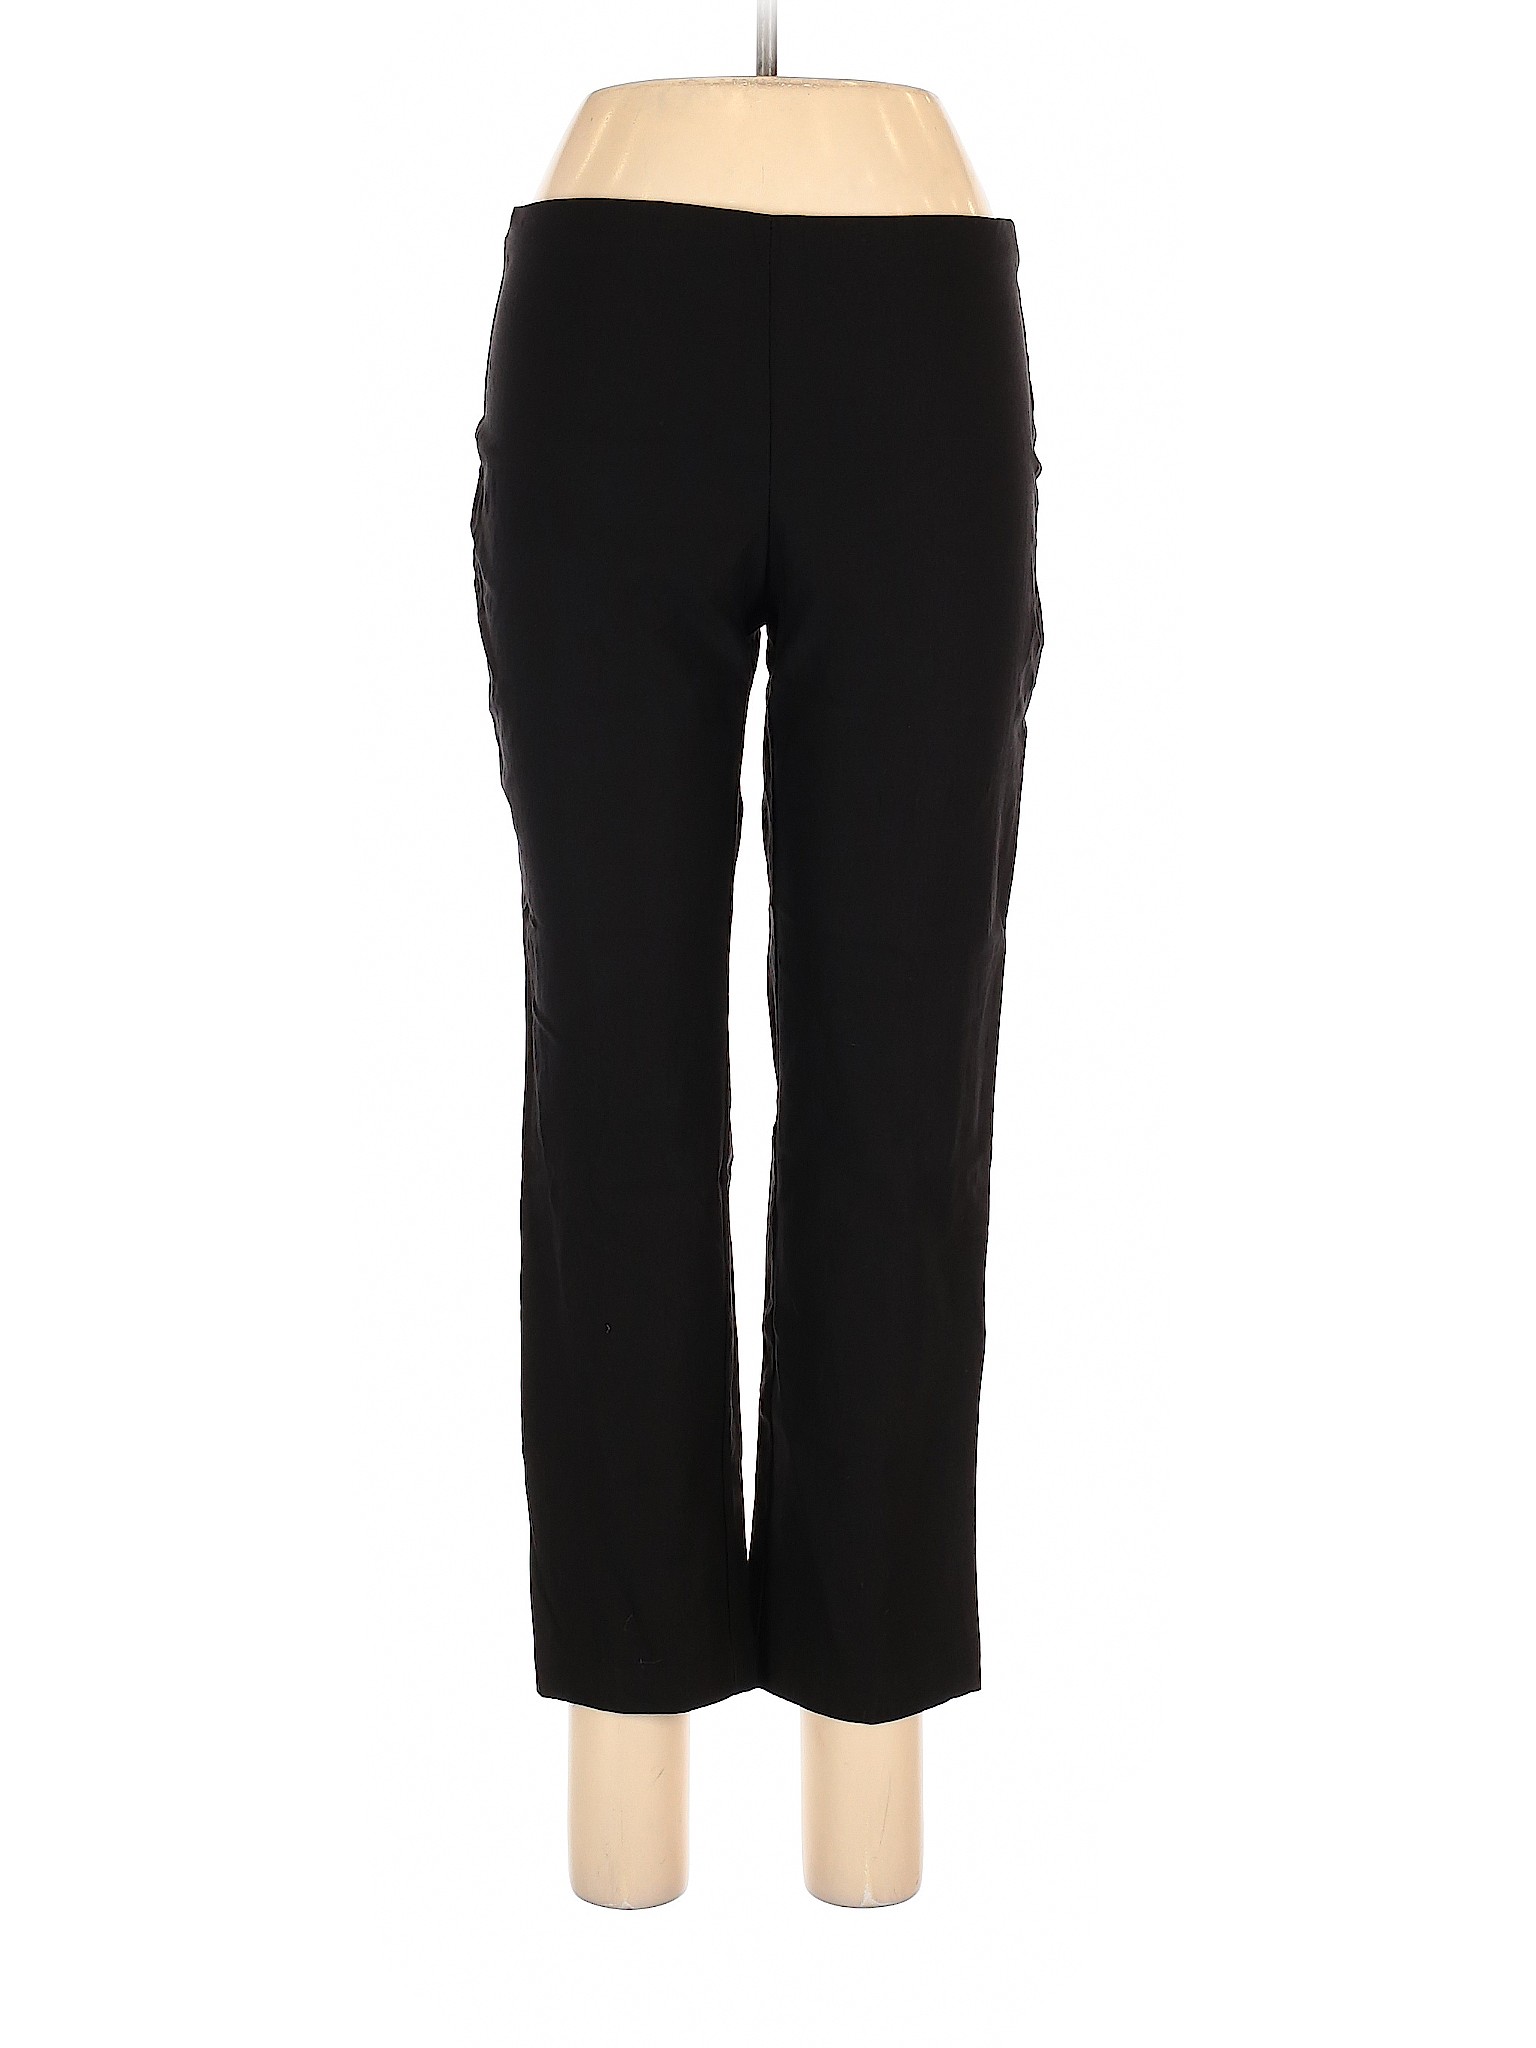 Attyre New York Solid Black Dress Pants Size 10 (Petite) - 83% off ...